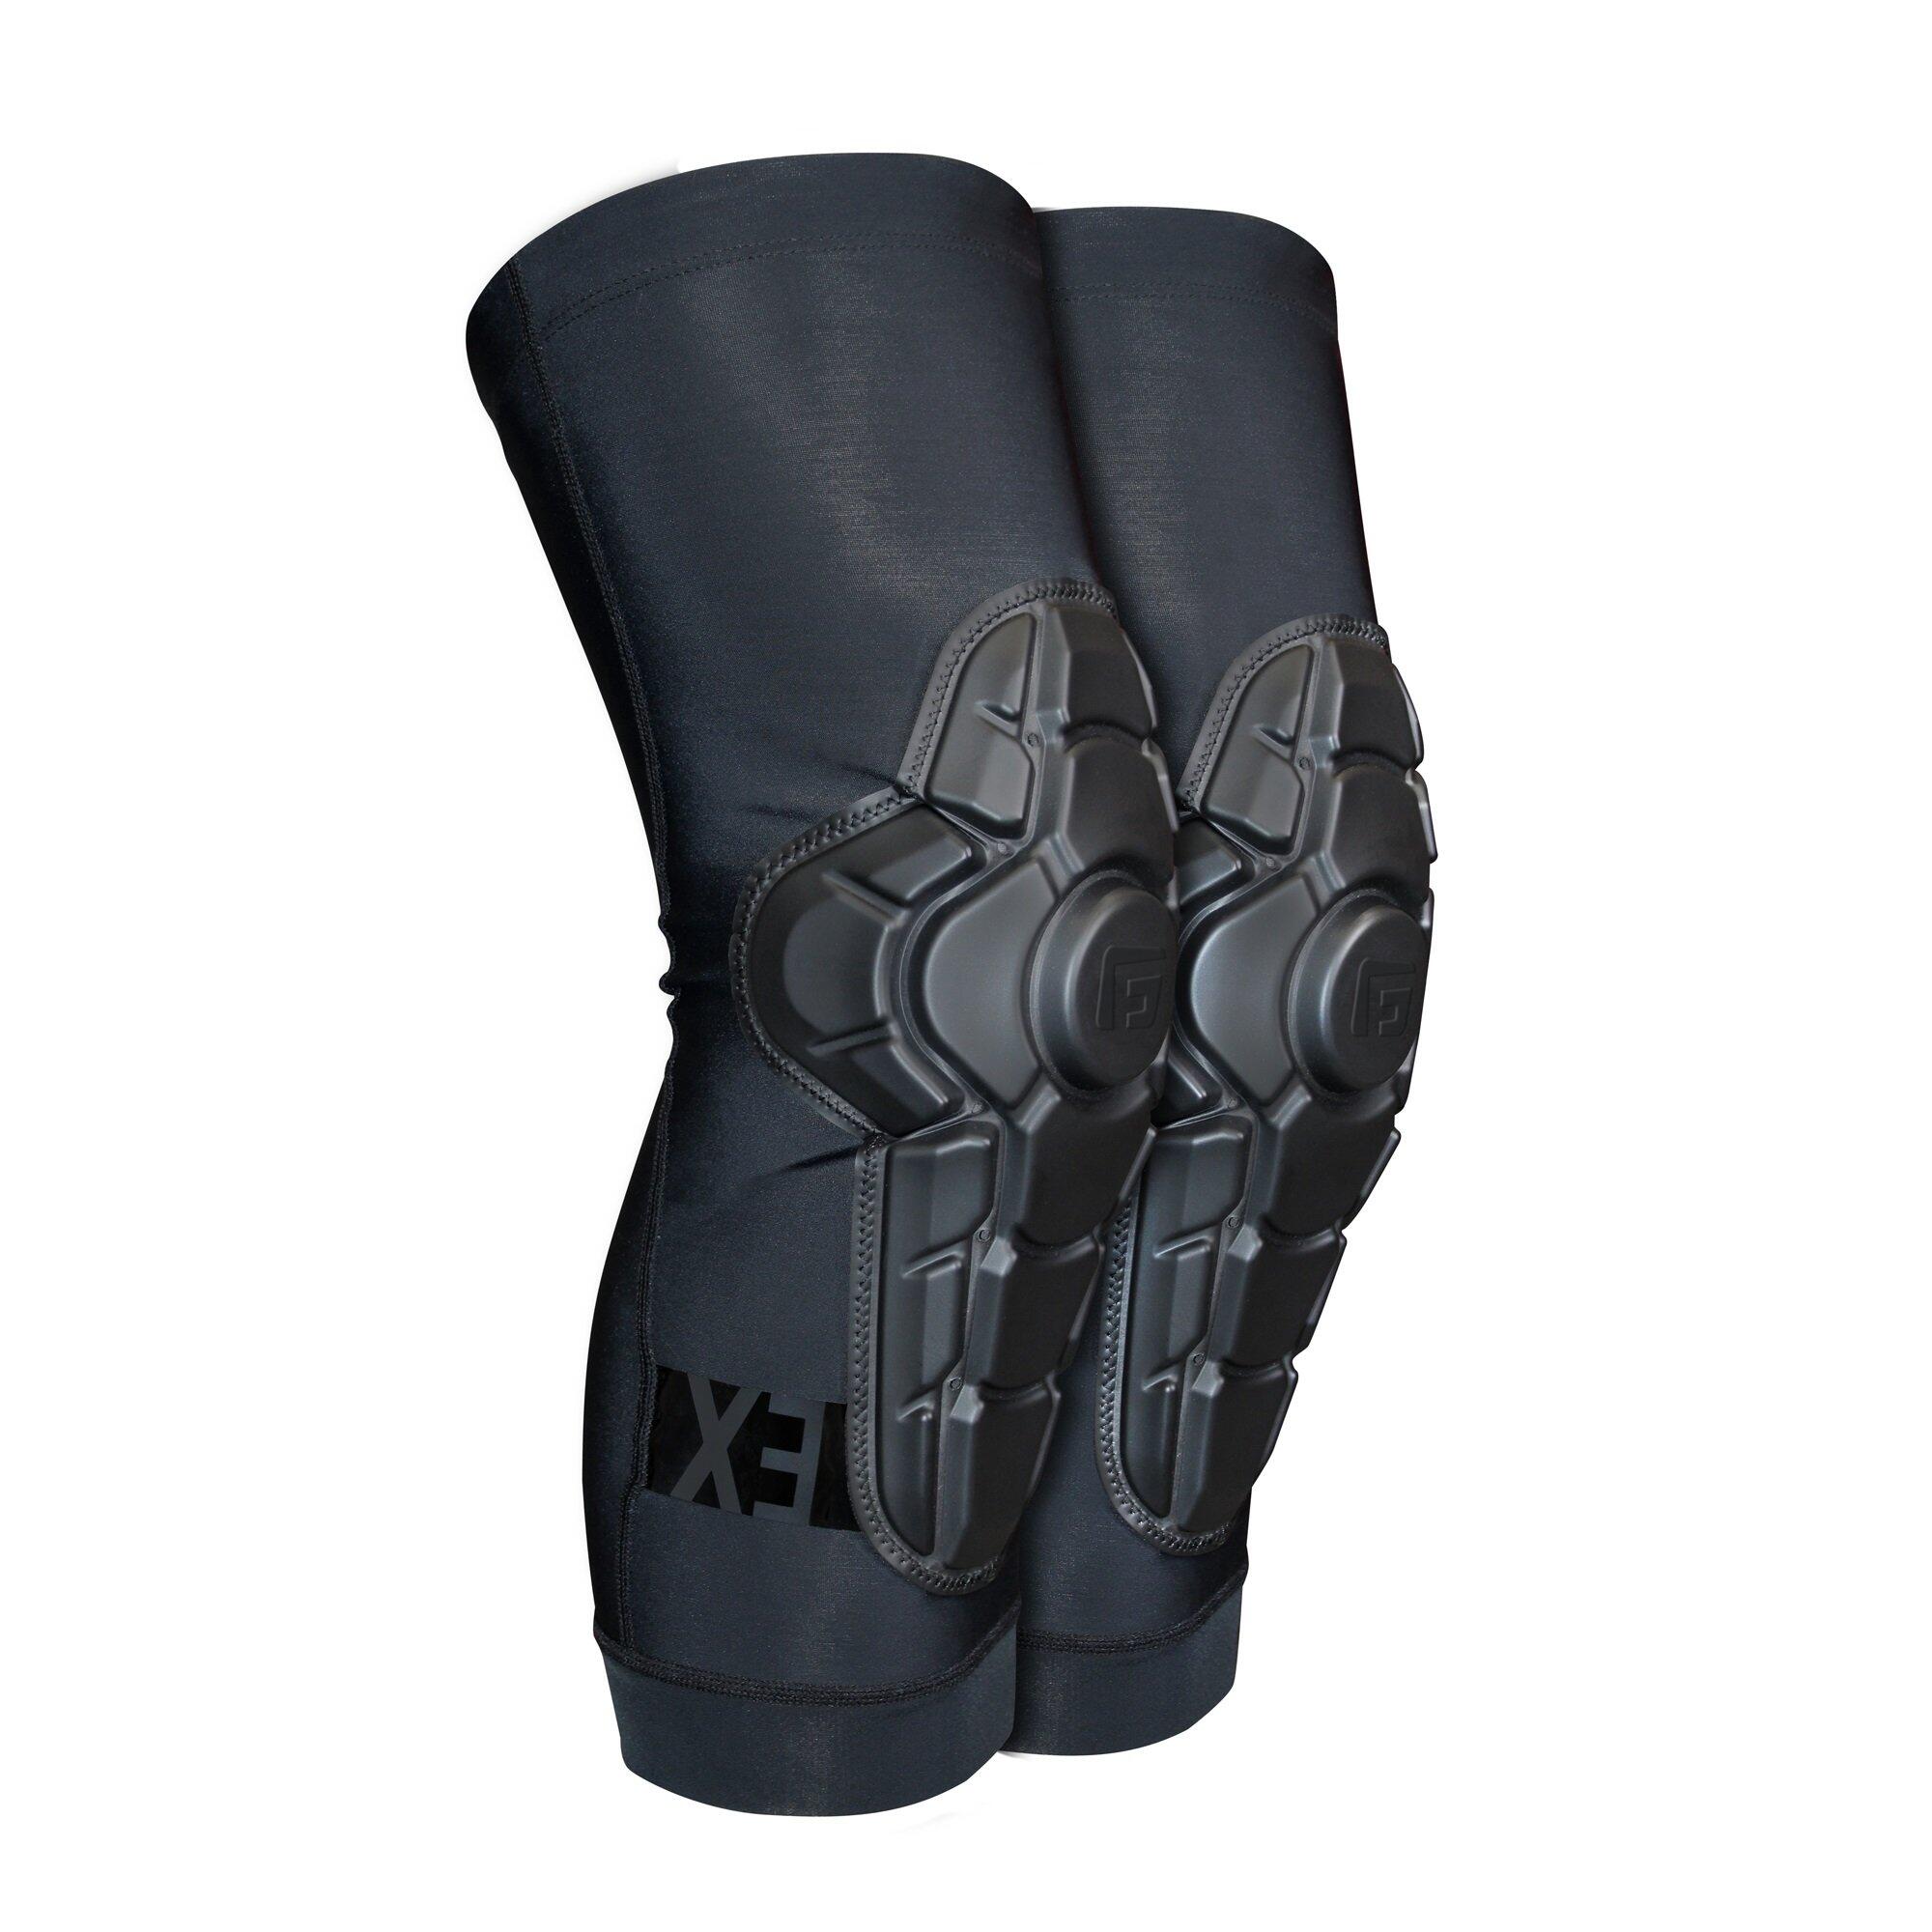 G-FORM G-Form Protection Pro-X3 Knee Guard Matt Black